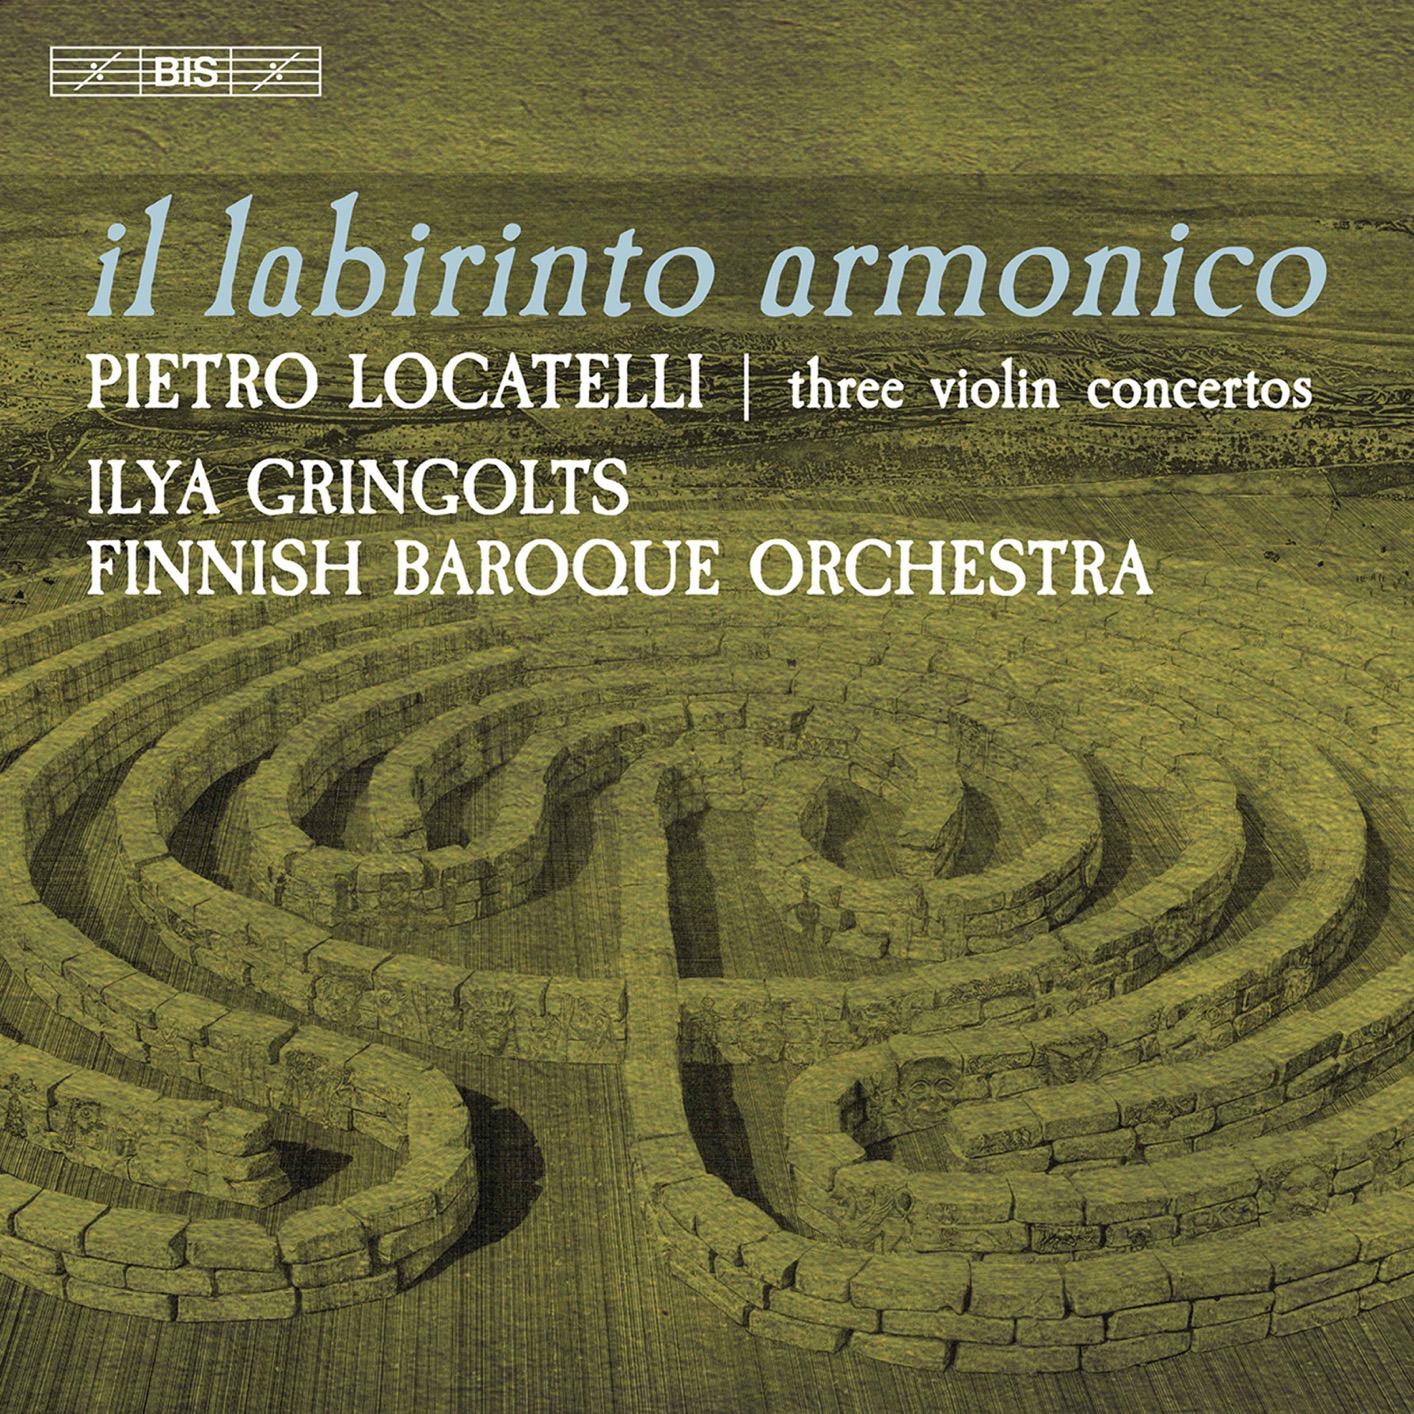 Ilya Gringolts & Finnish Baroque Orchestra – Il labirinto armonico (2021) [FLAC 24bit/96kHz]